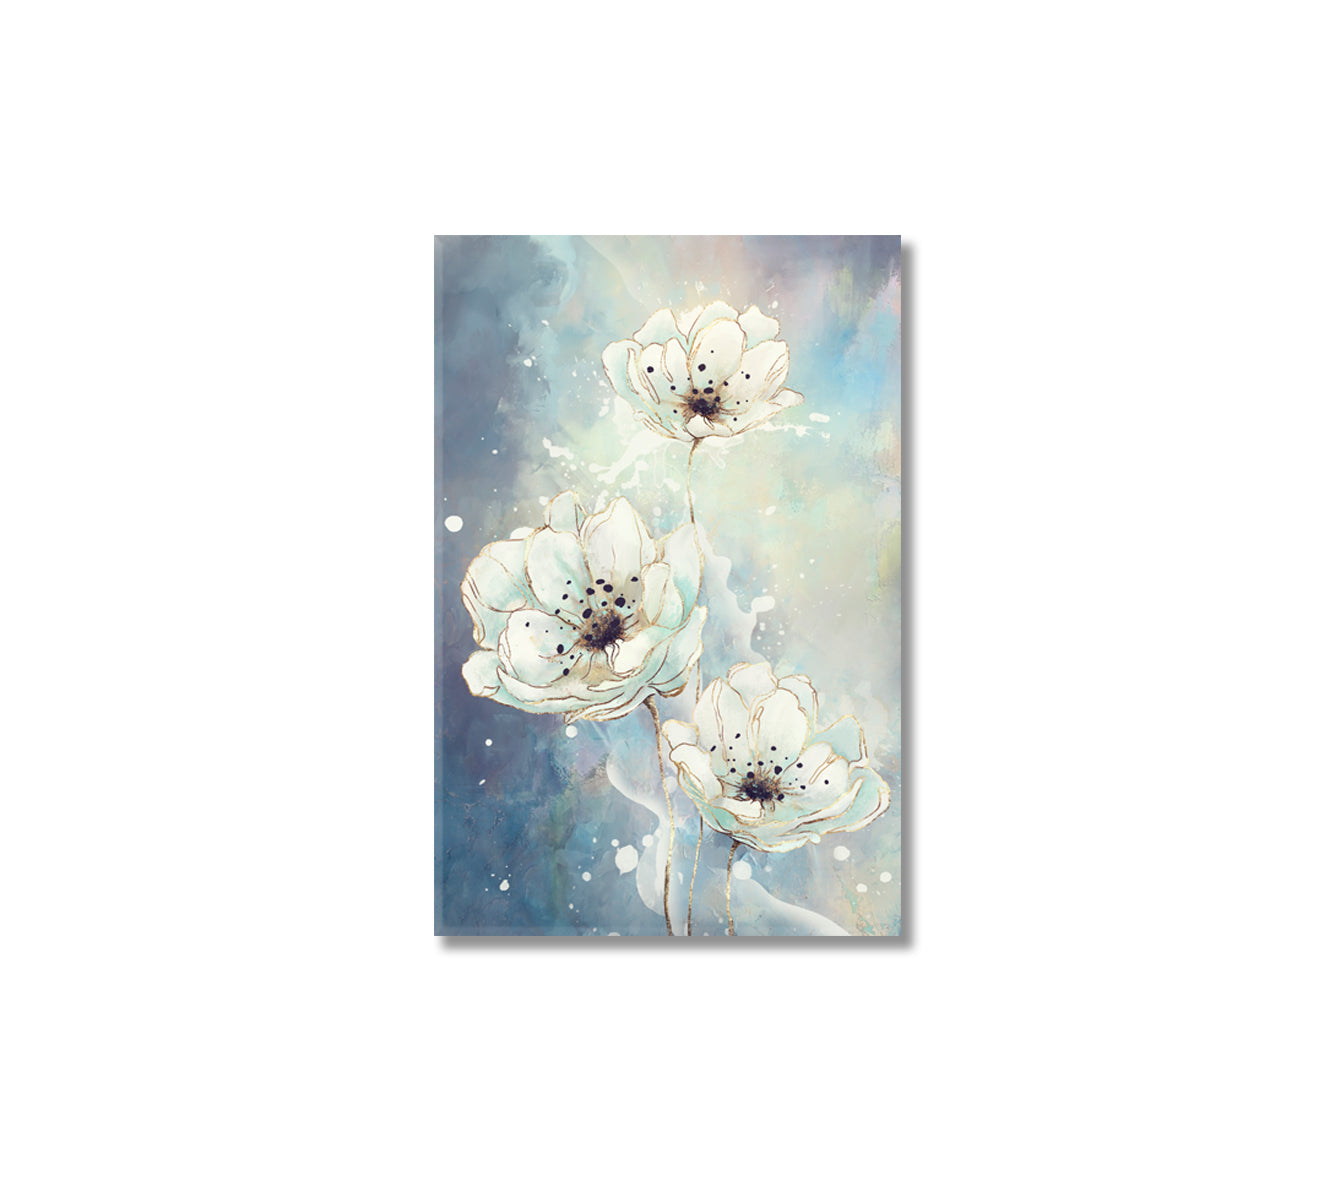 Tender White Flowers Canvas Art Decor-Canvas Print-CetArt-1 panel-16x24 inches-CetArt